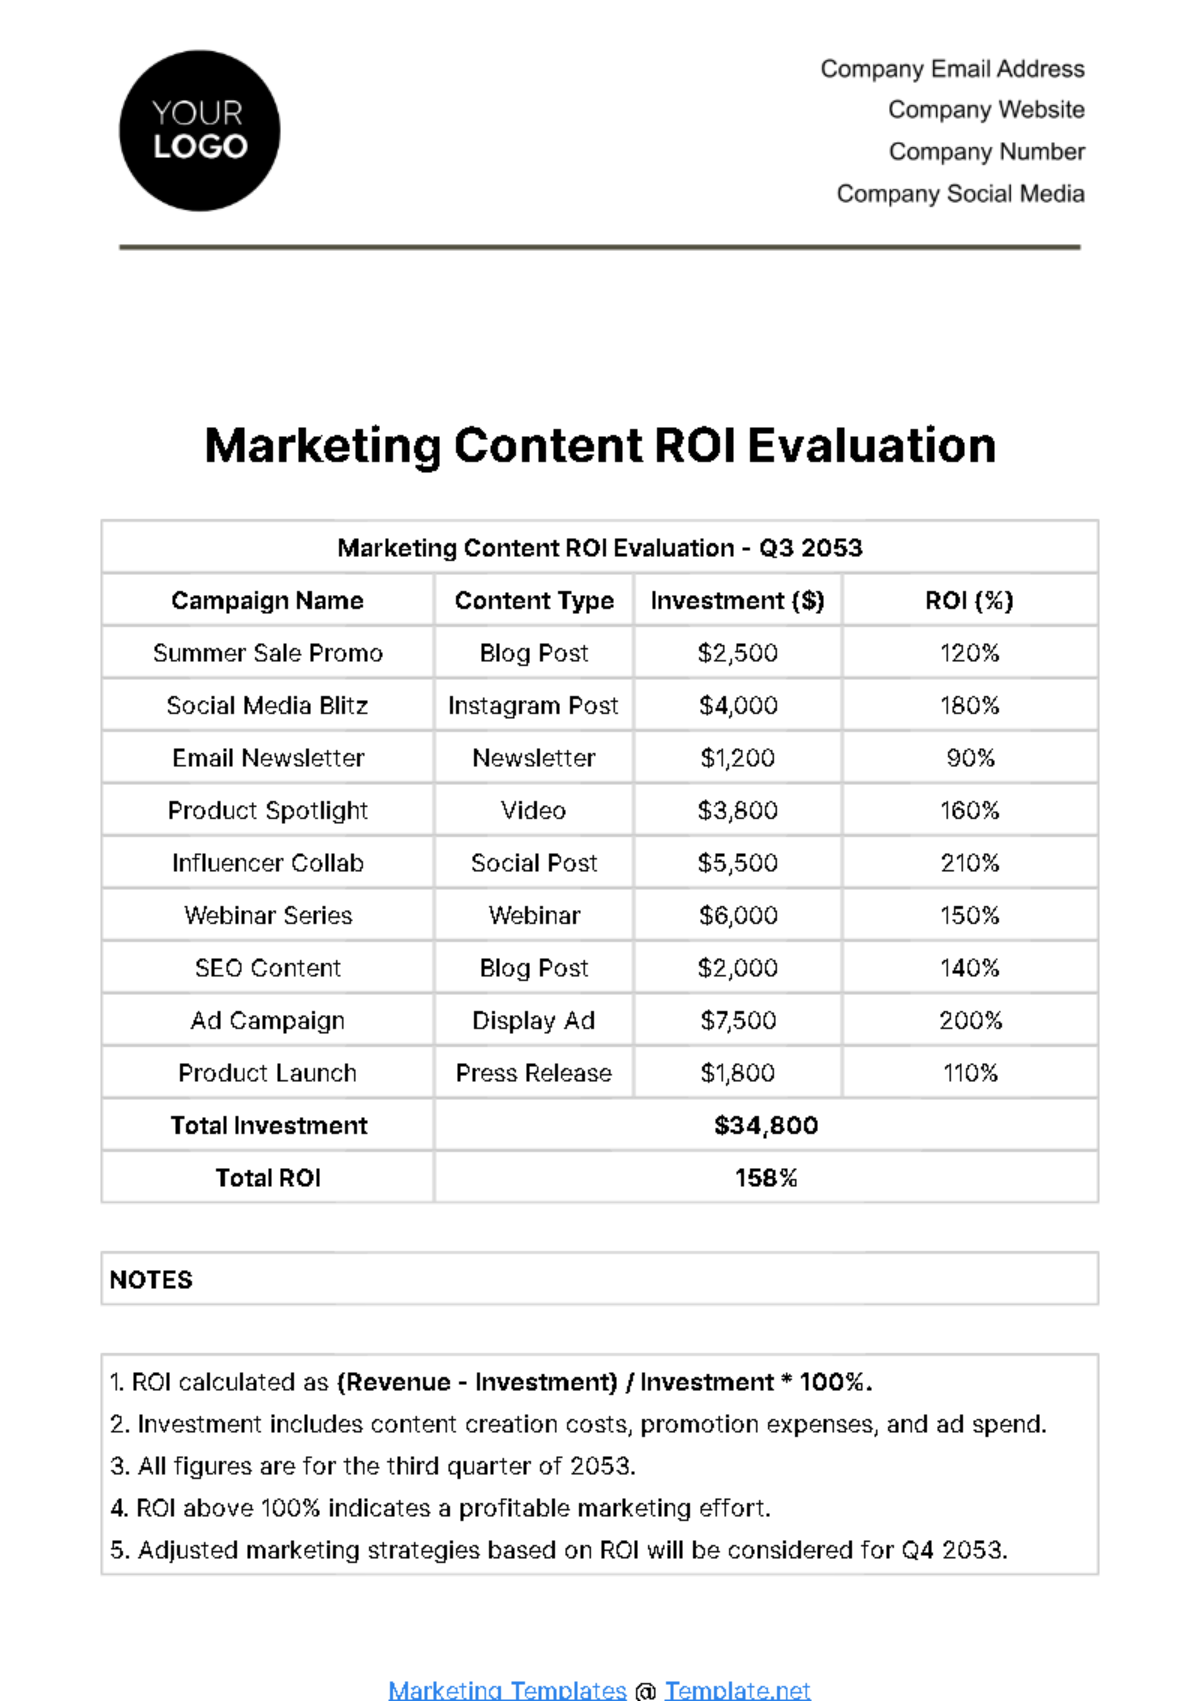 Marketing Content ROI Evaluation Template